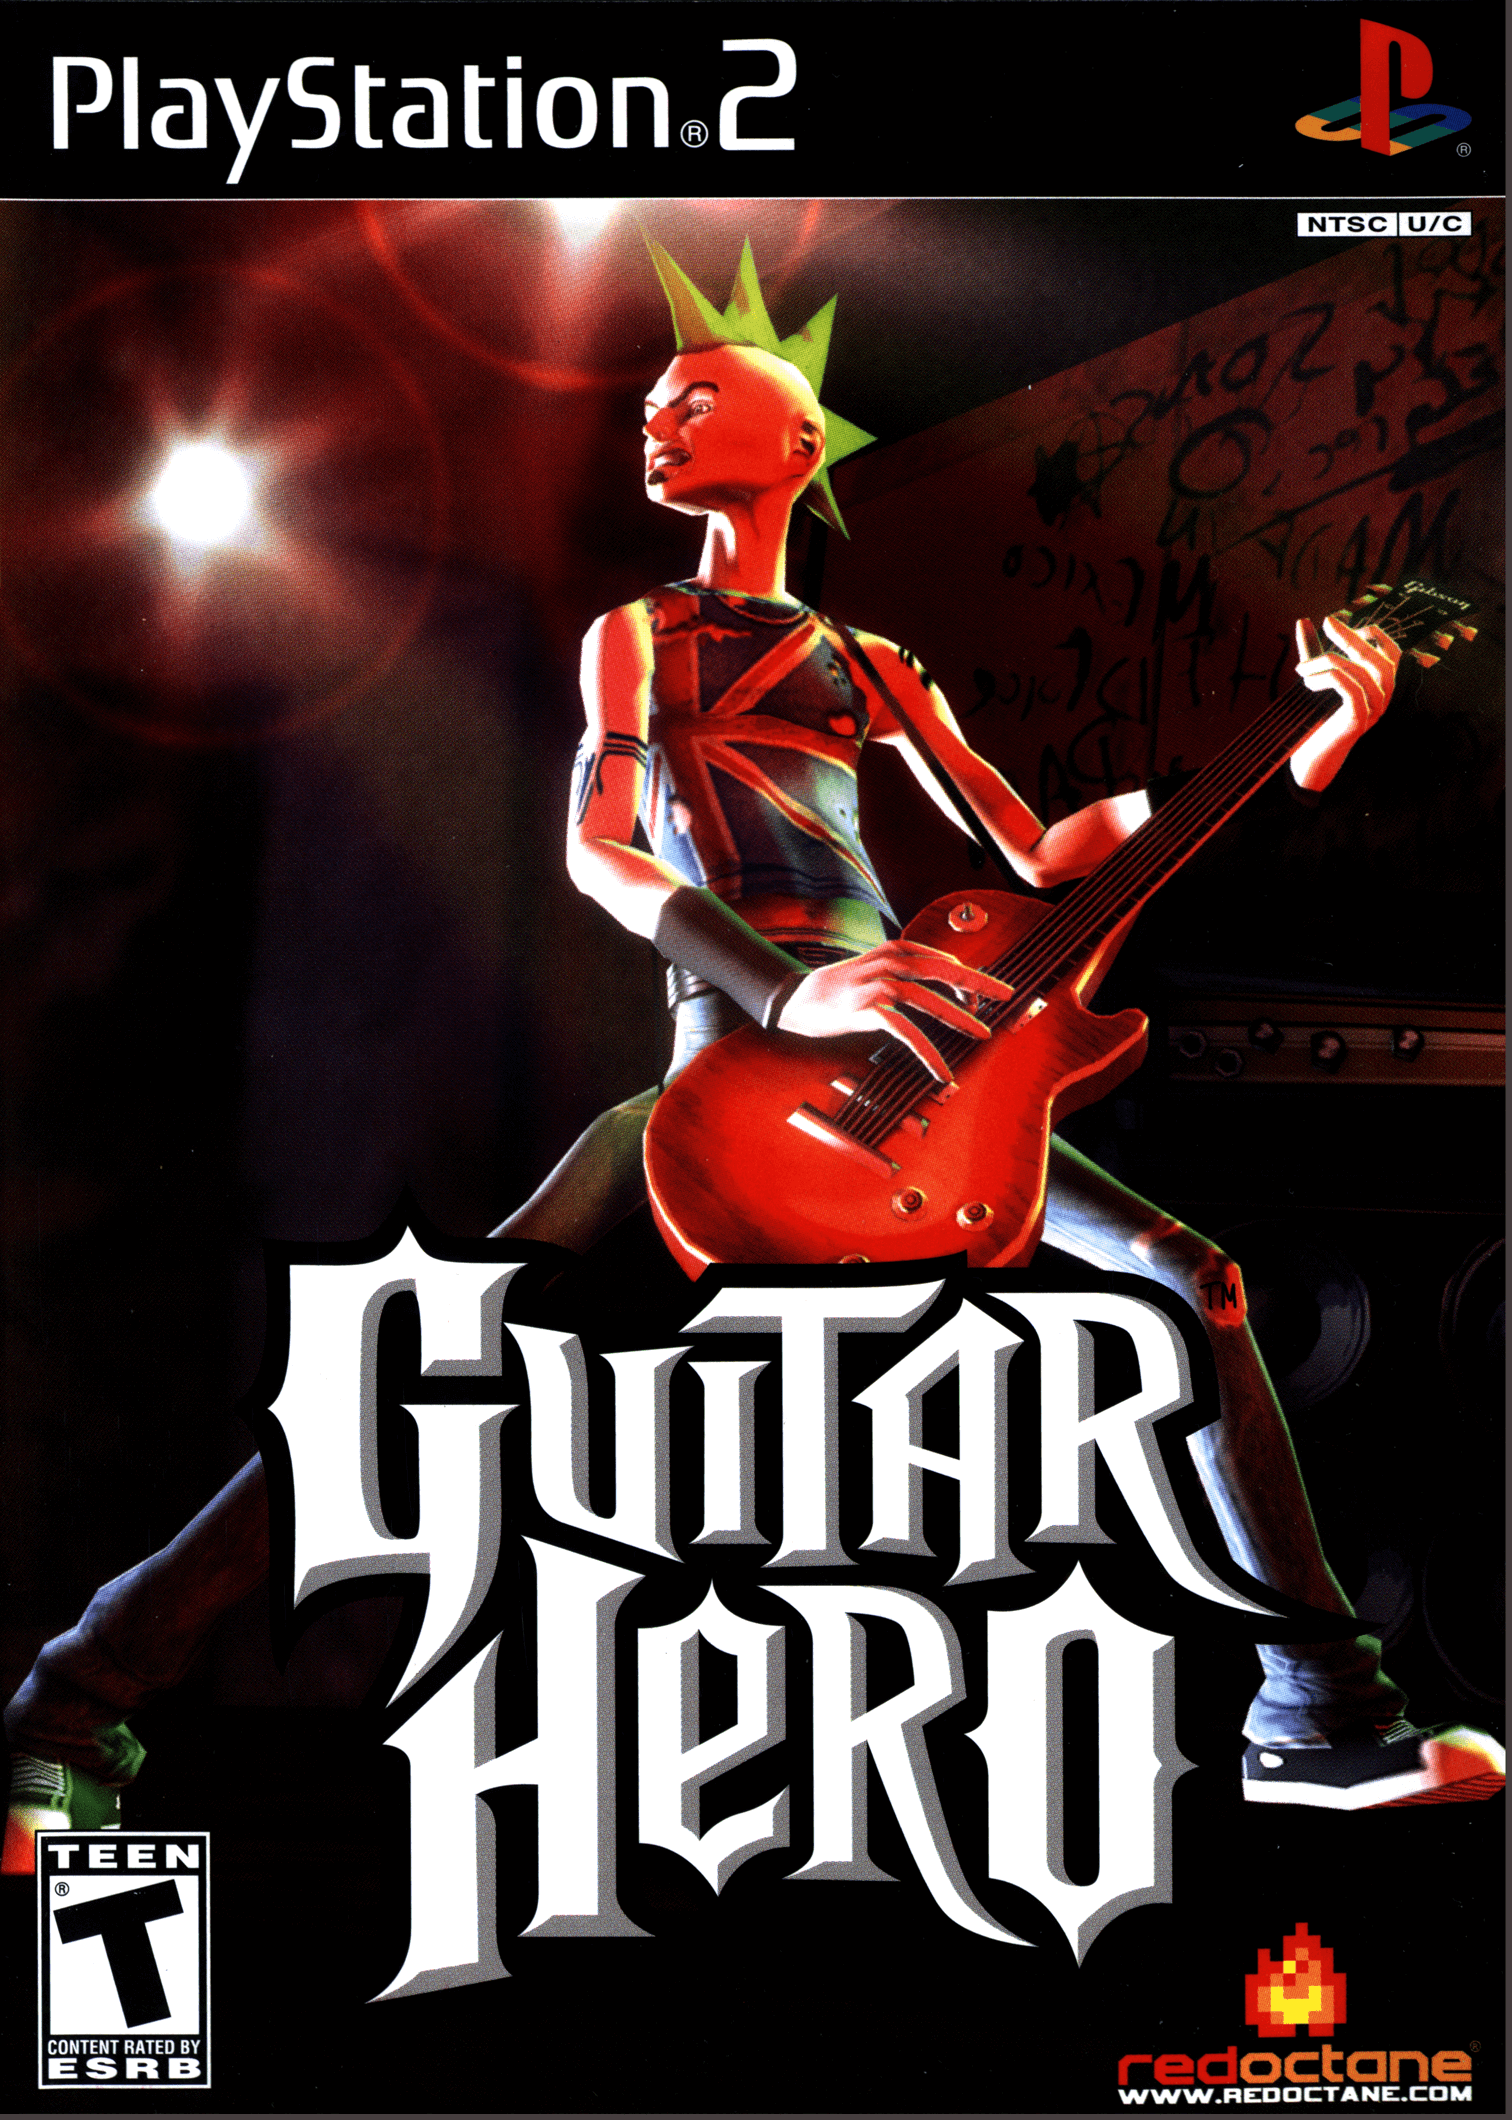 GUITAR HERO - Playstation 2 (PS2) iso download